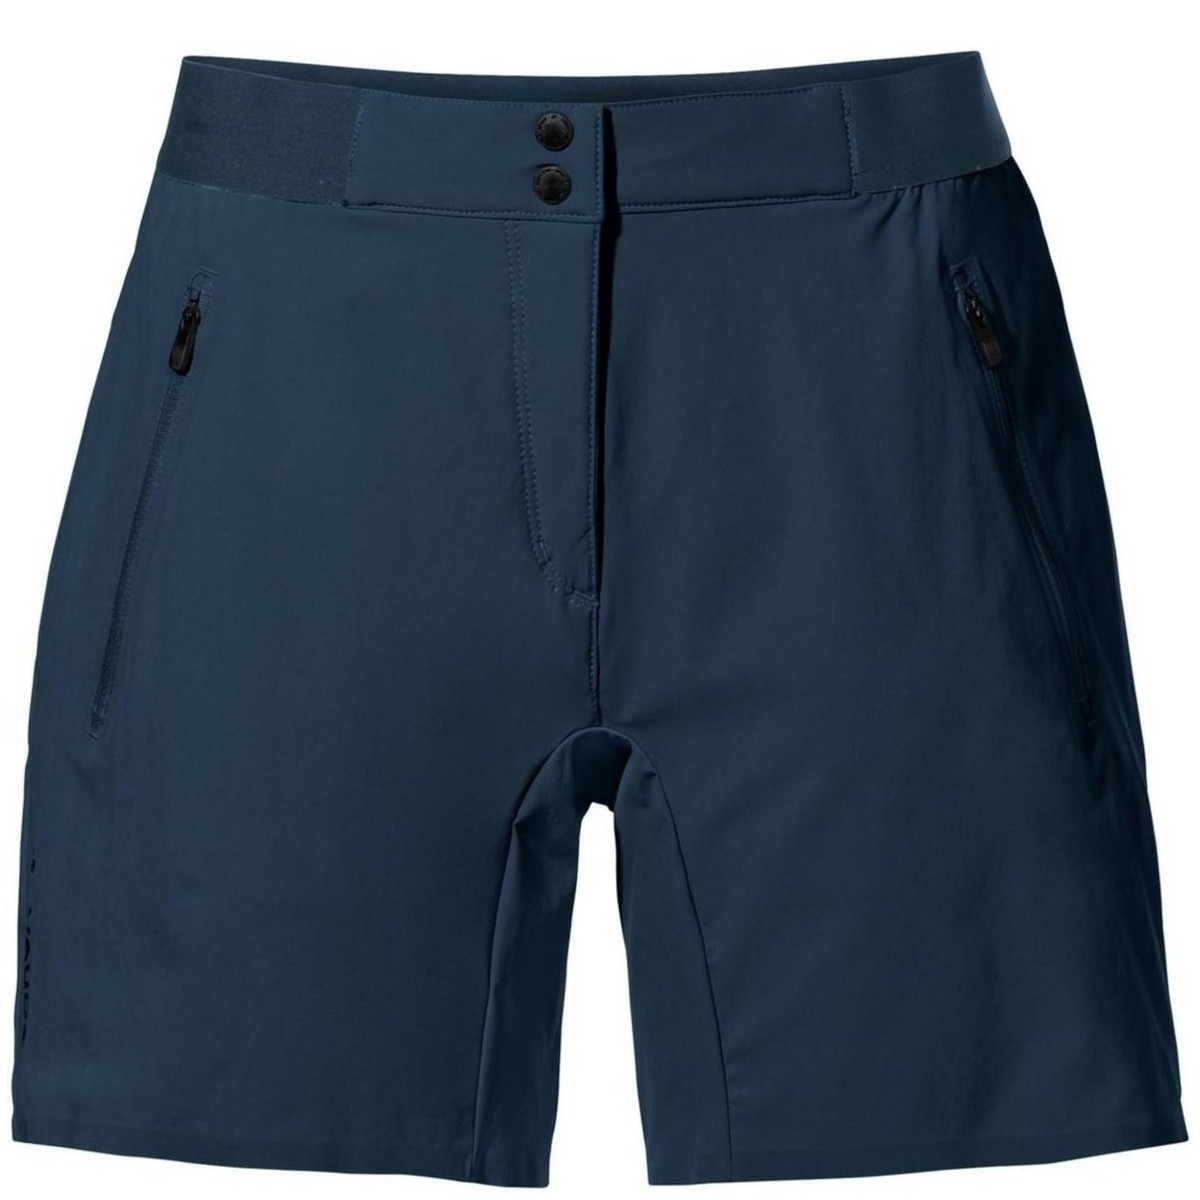 Kleidung Damen Shorts / Bermudas Vaude Sport Wo Scopi LW II dark sea 40961 179-179 Other